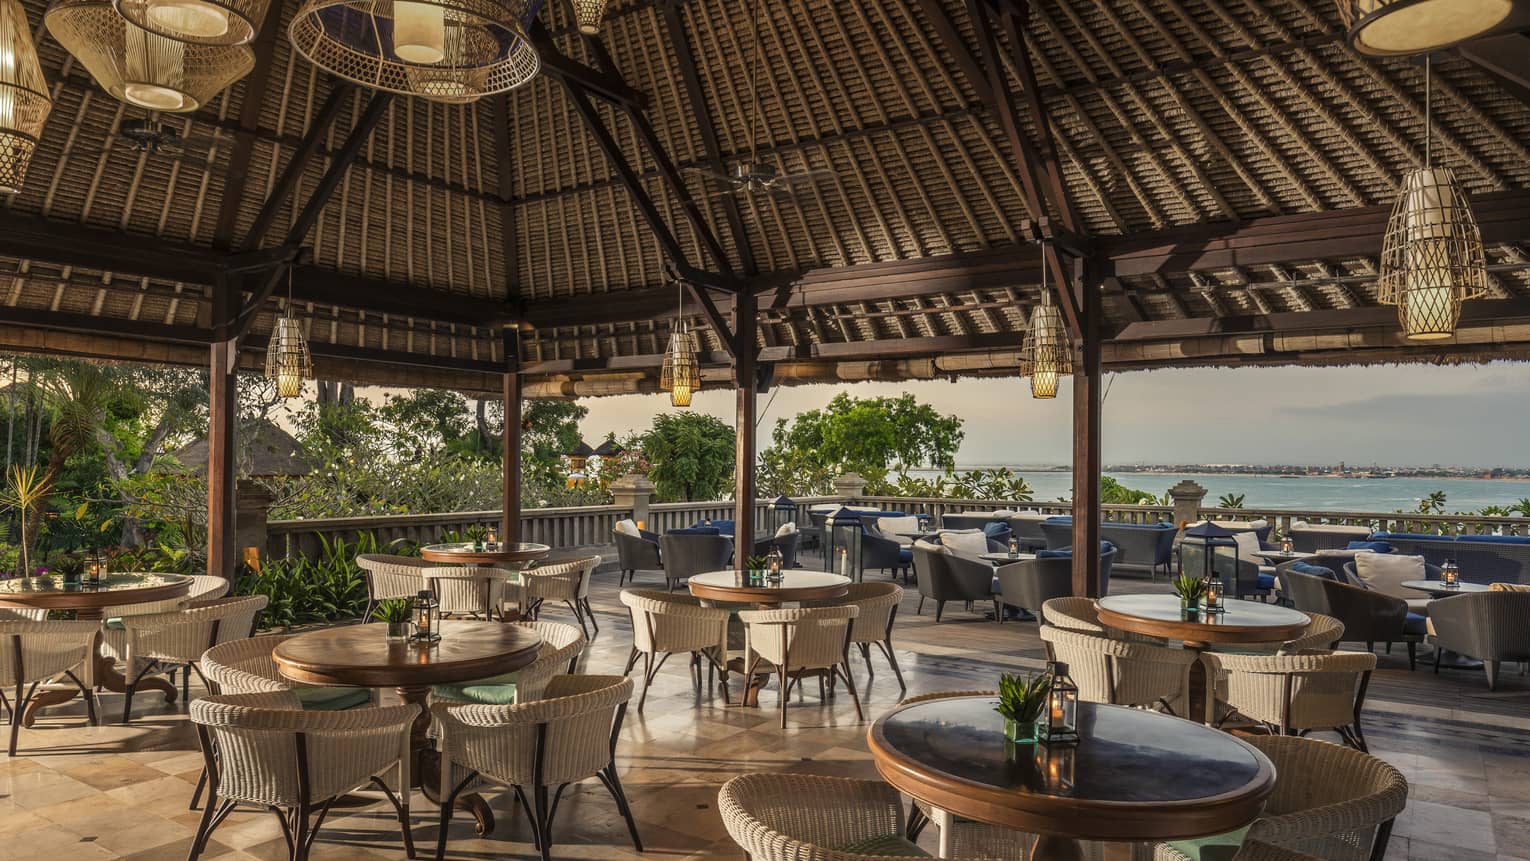 Dining tables in Taman Wantilan open air pavilion restaurant 